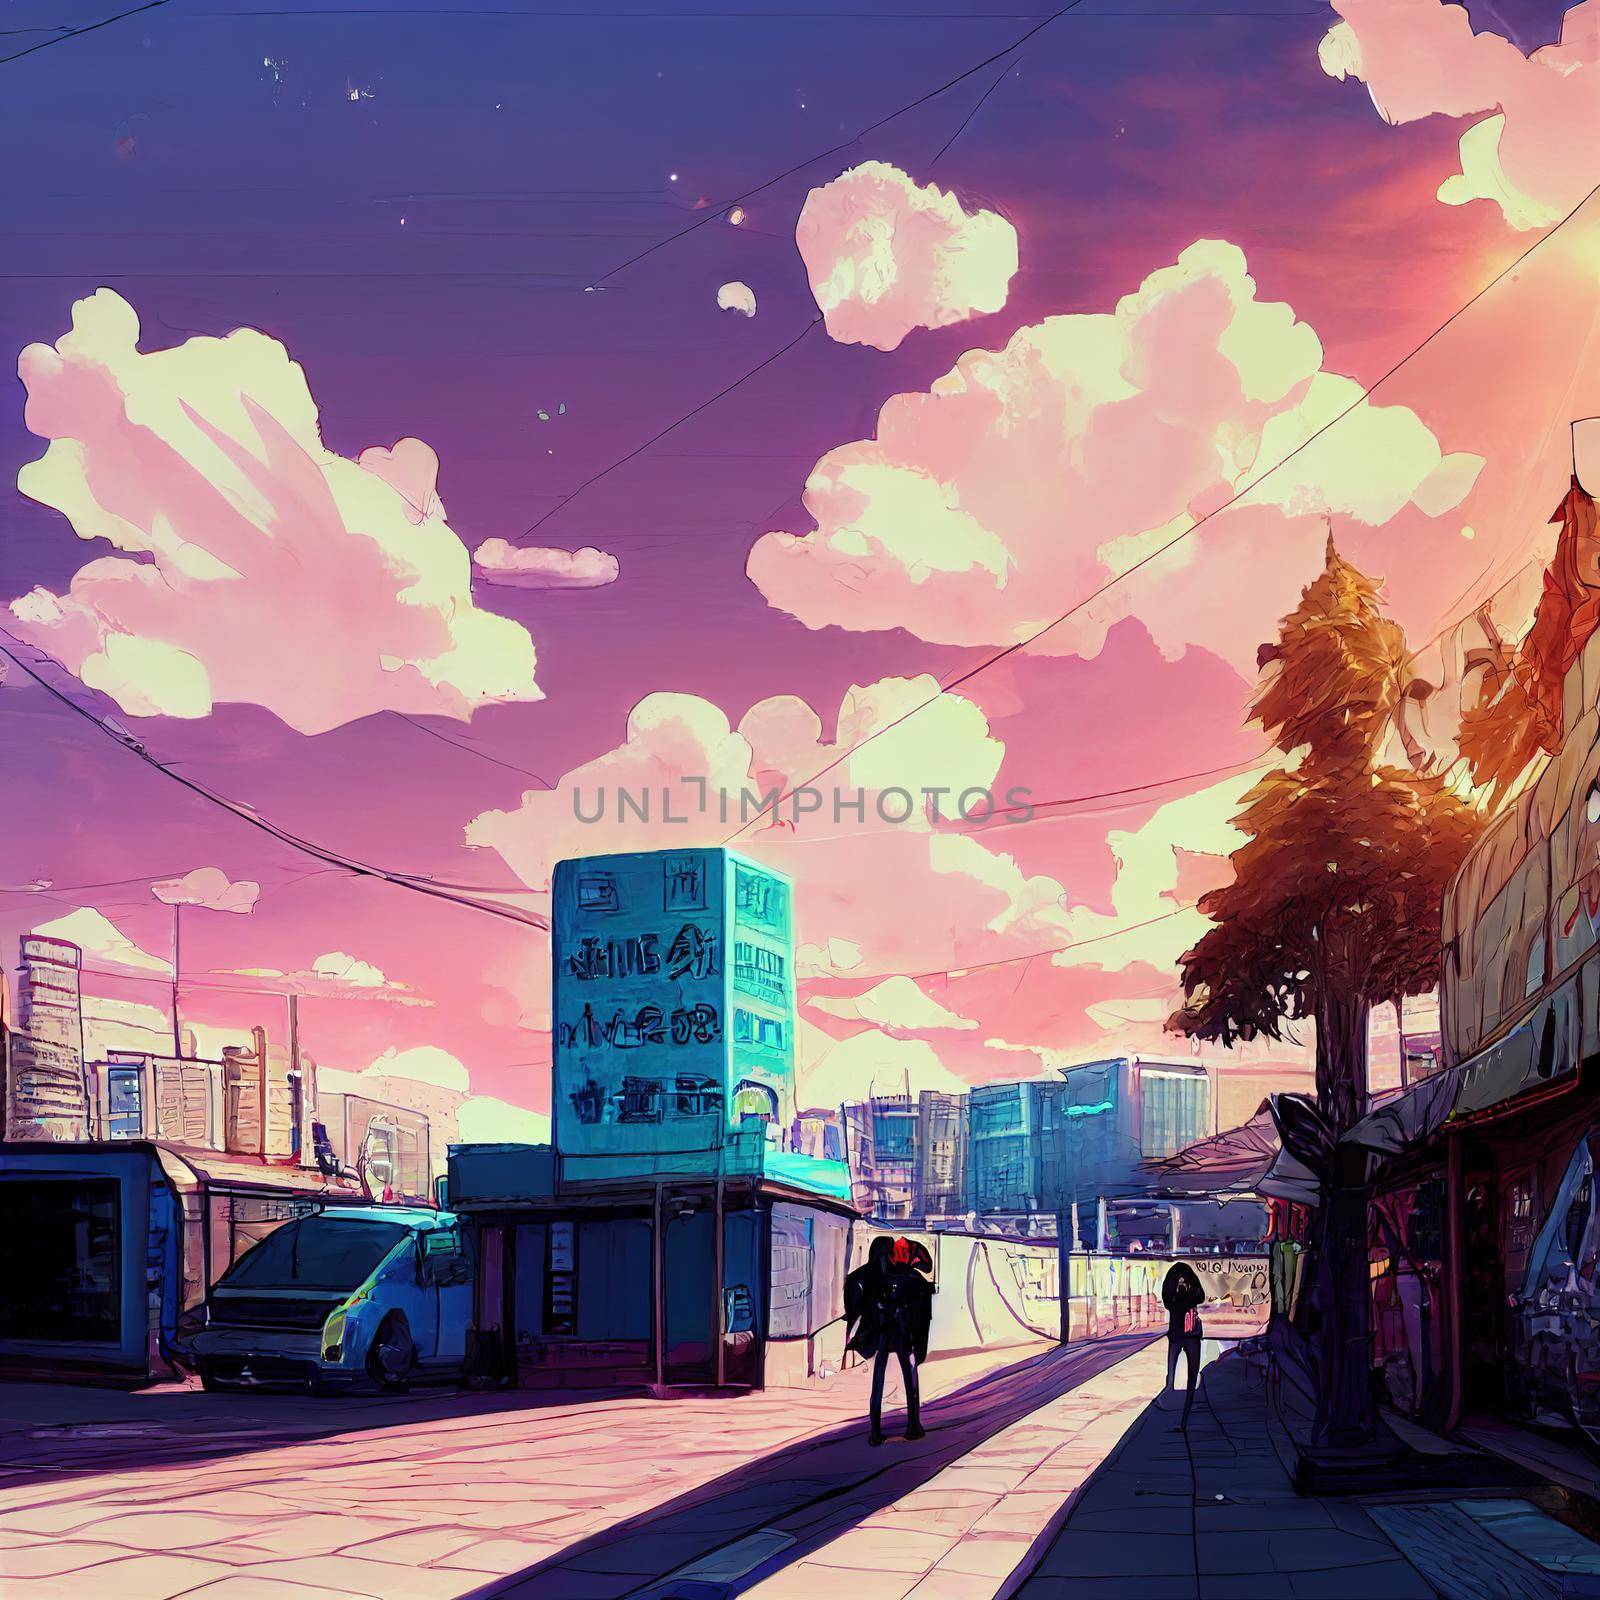 anime style city street by 2ragon